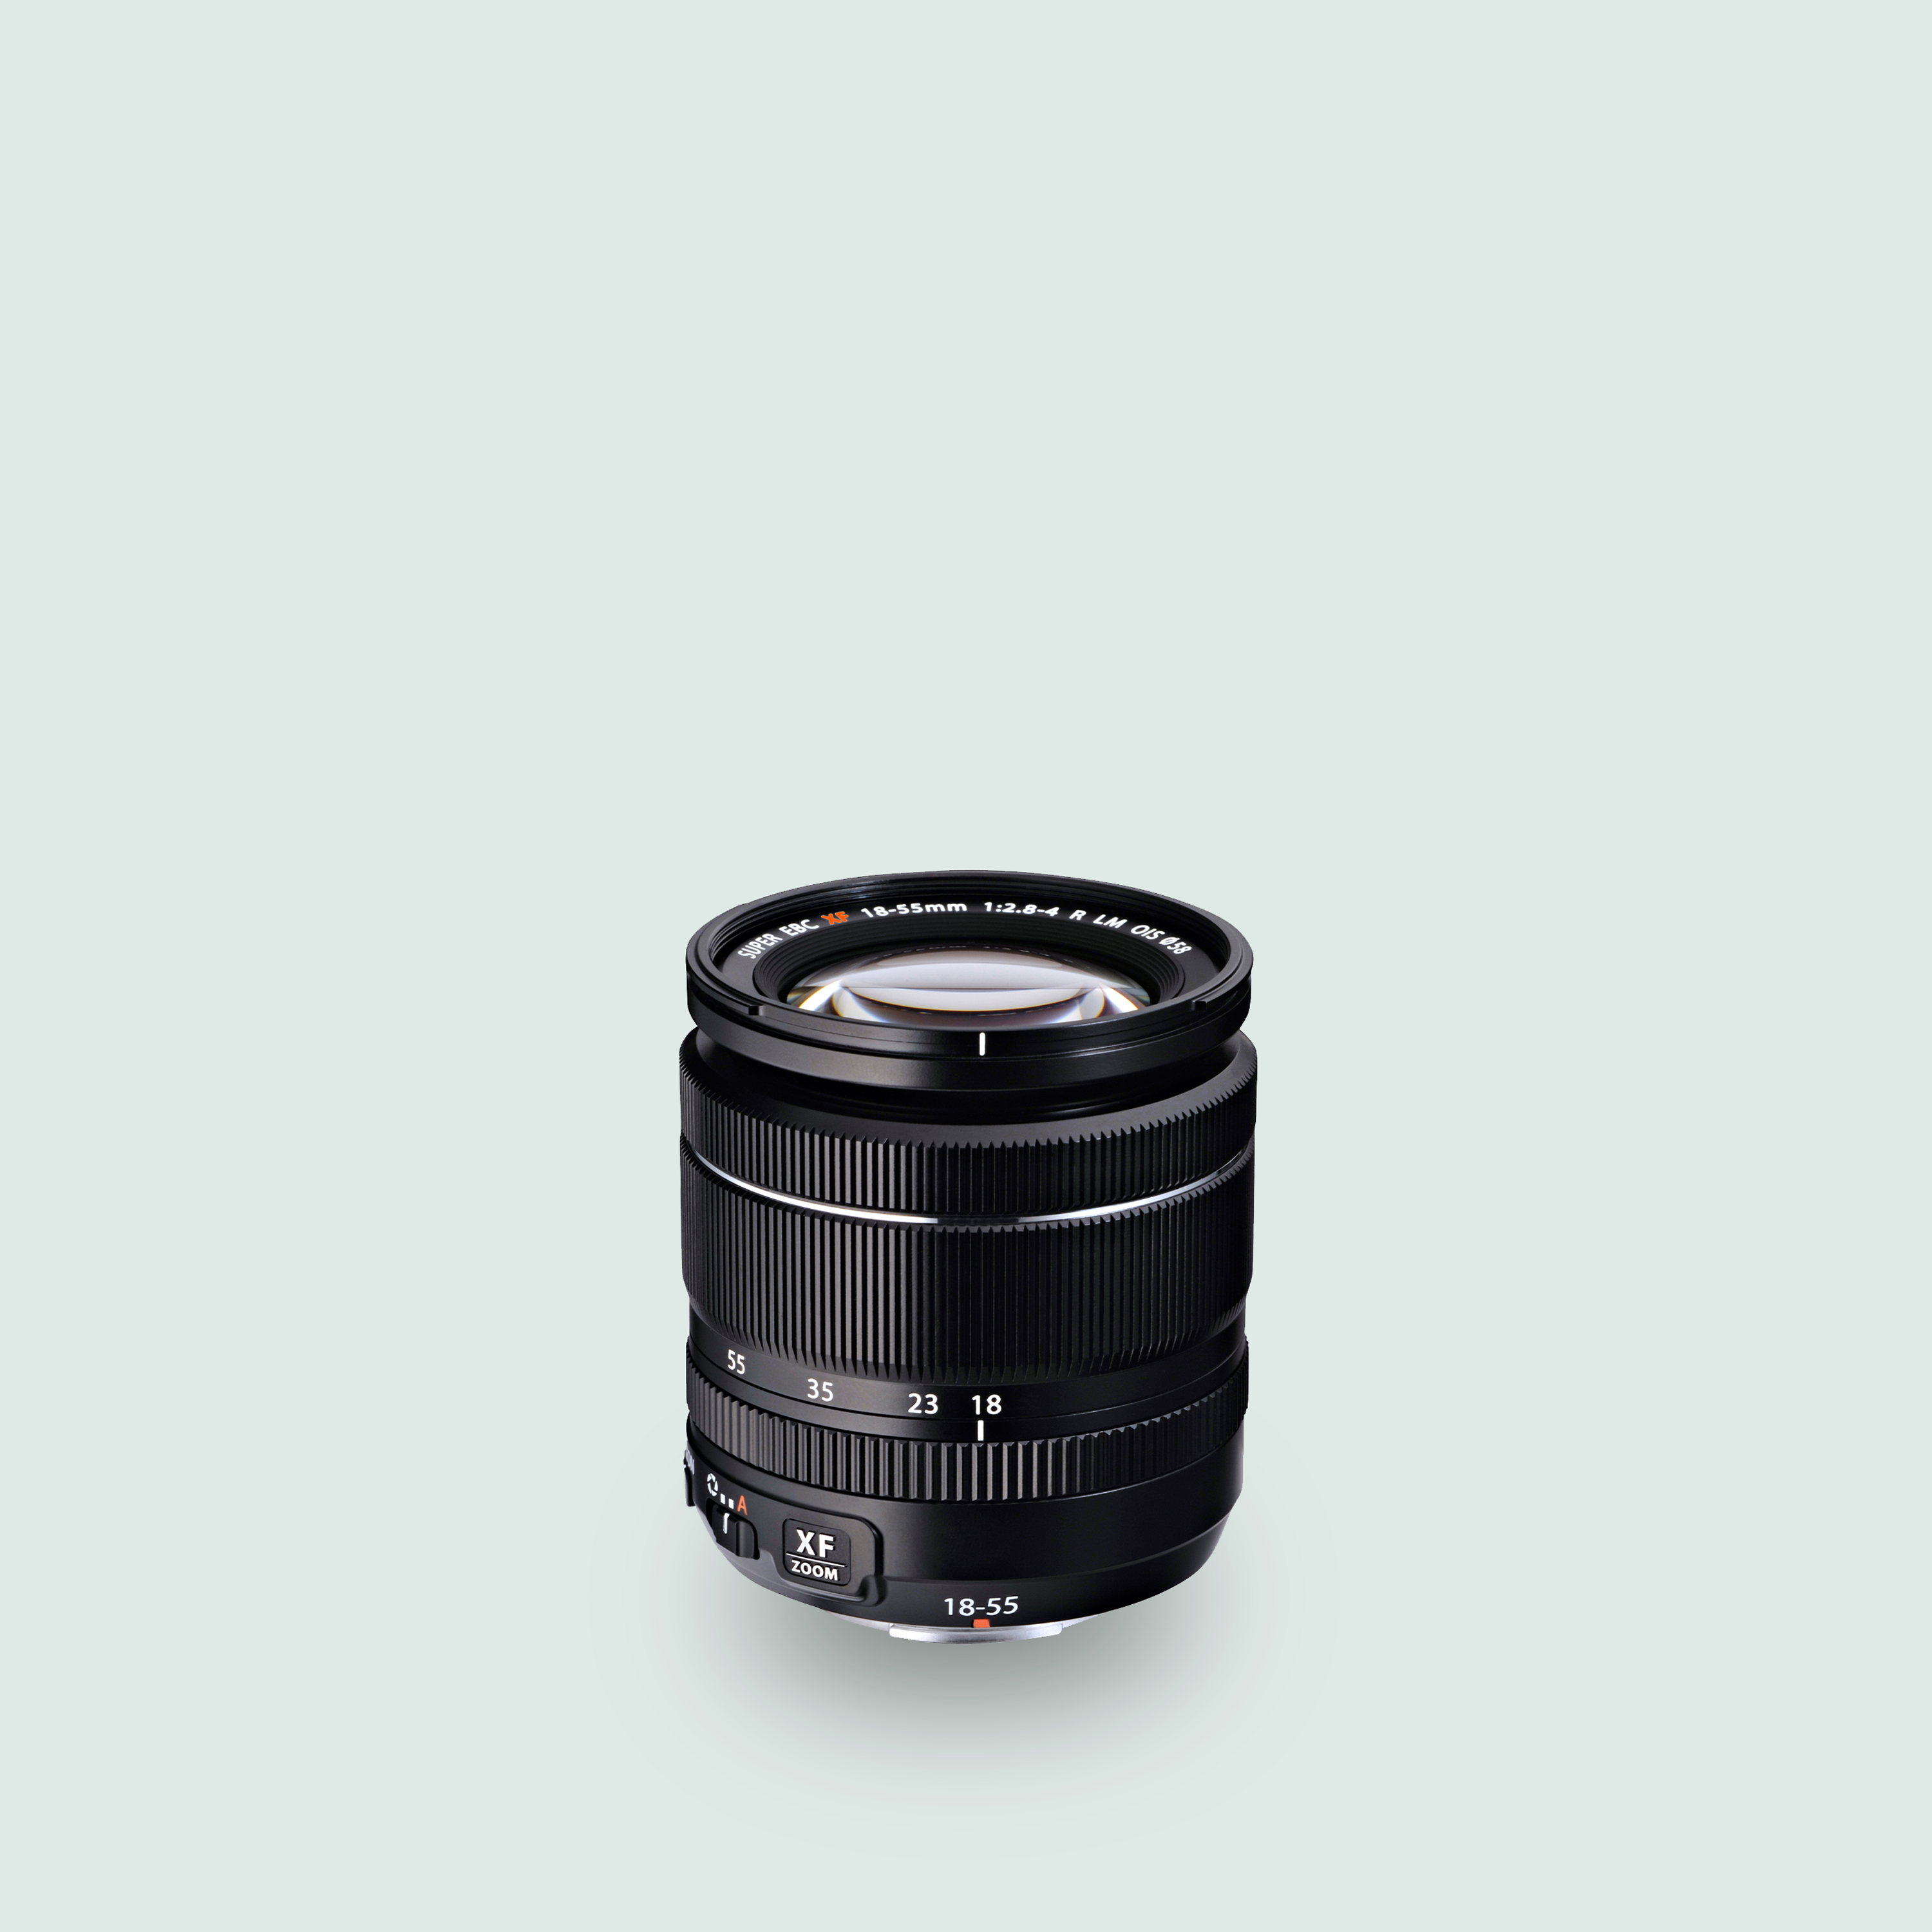 XF 18-55mm F2.8-4 R LM OIS Lens | Fujifilm AU House of Photography